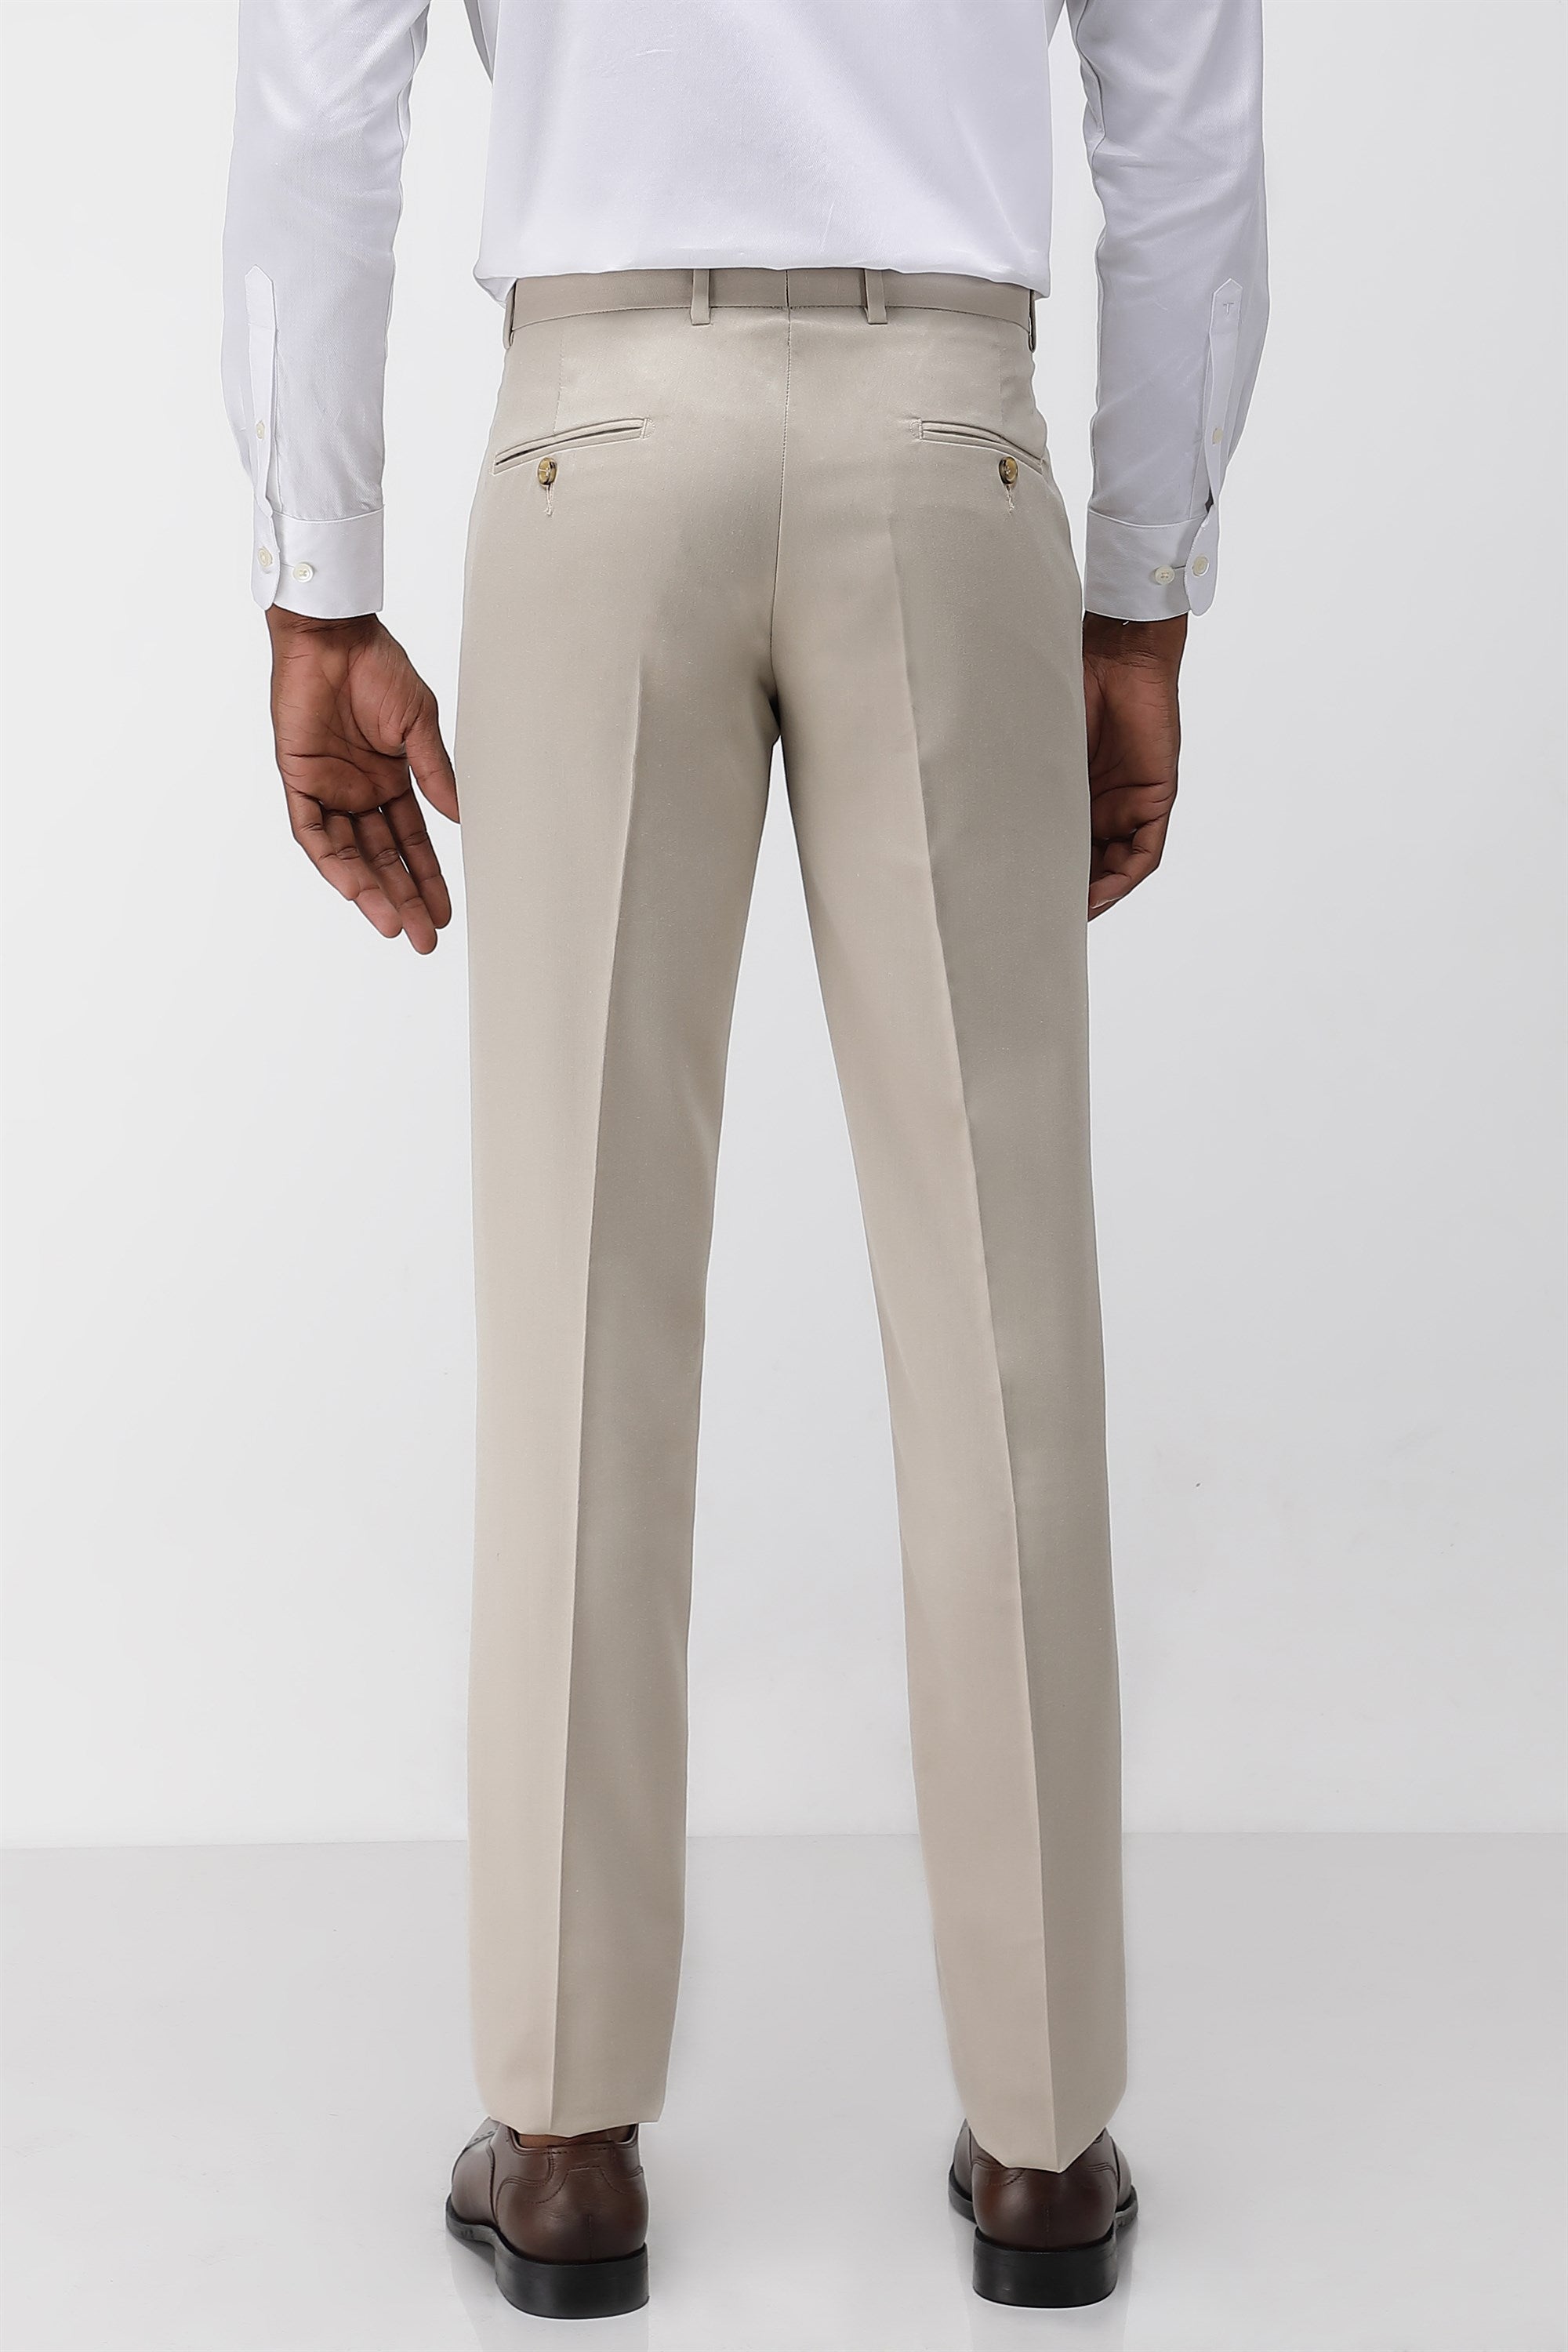 Formal Beige Trouser for men Big Size  Plus Size Pants  Regular Fit   Size  36  38 40  42